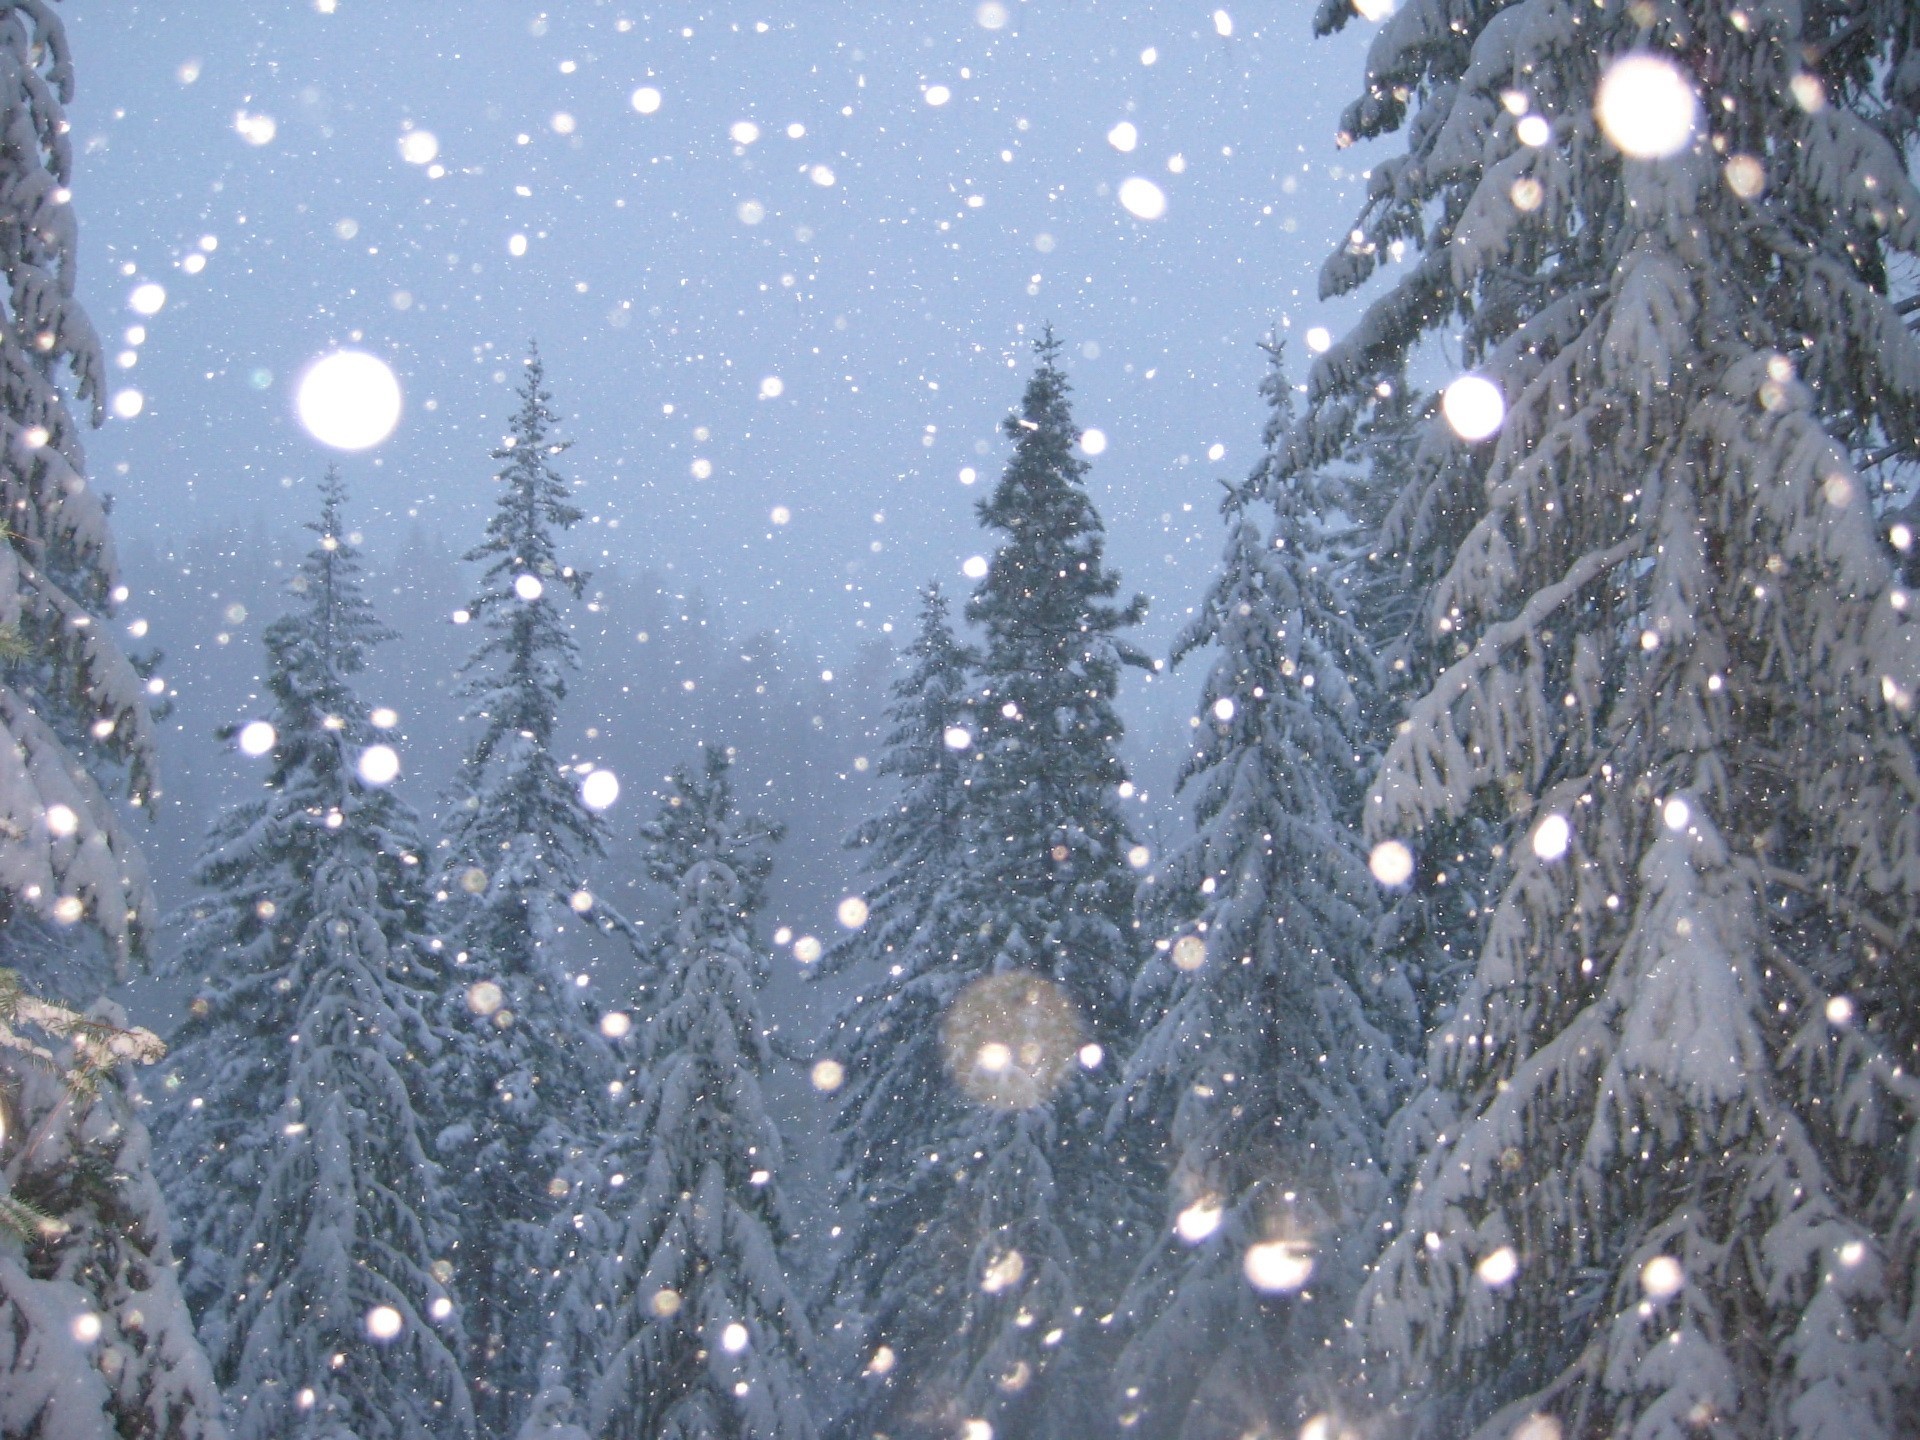 Включи падающий снег. В новогоднем лесу. Падающий снег. Сказочный зимний лес. Зимний новогодний лес.